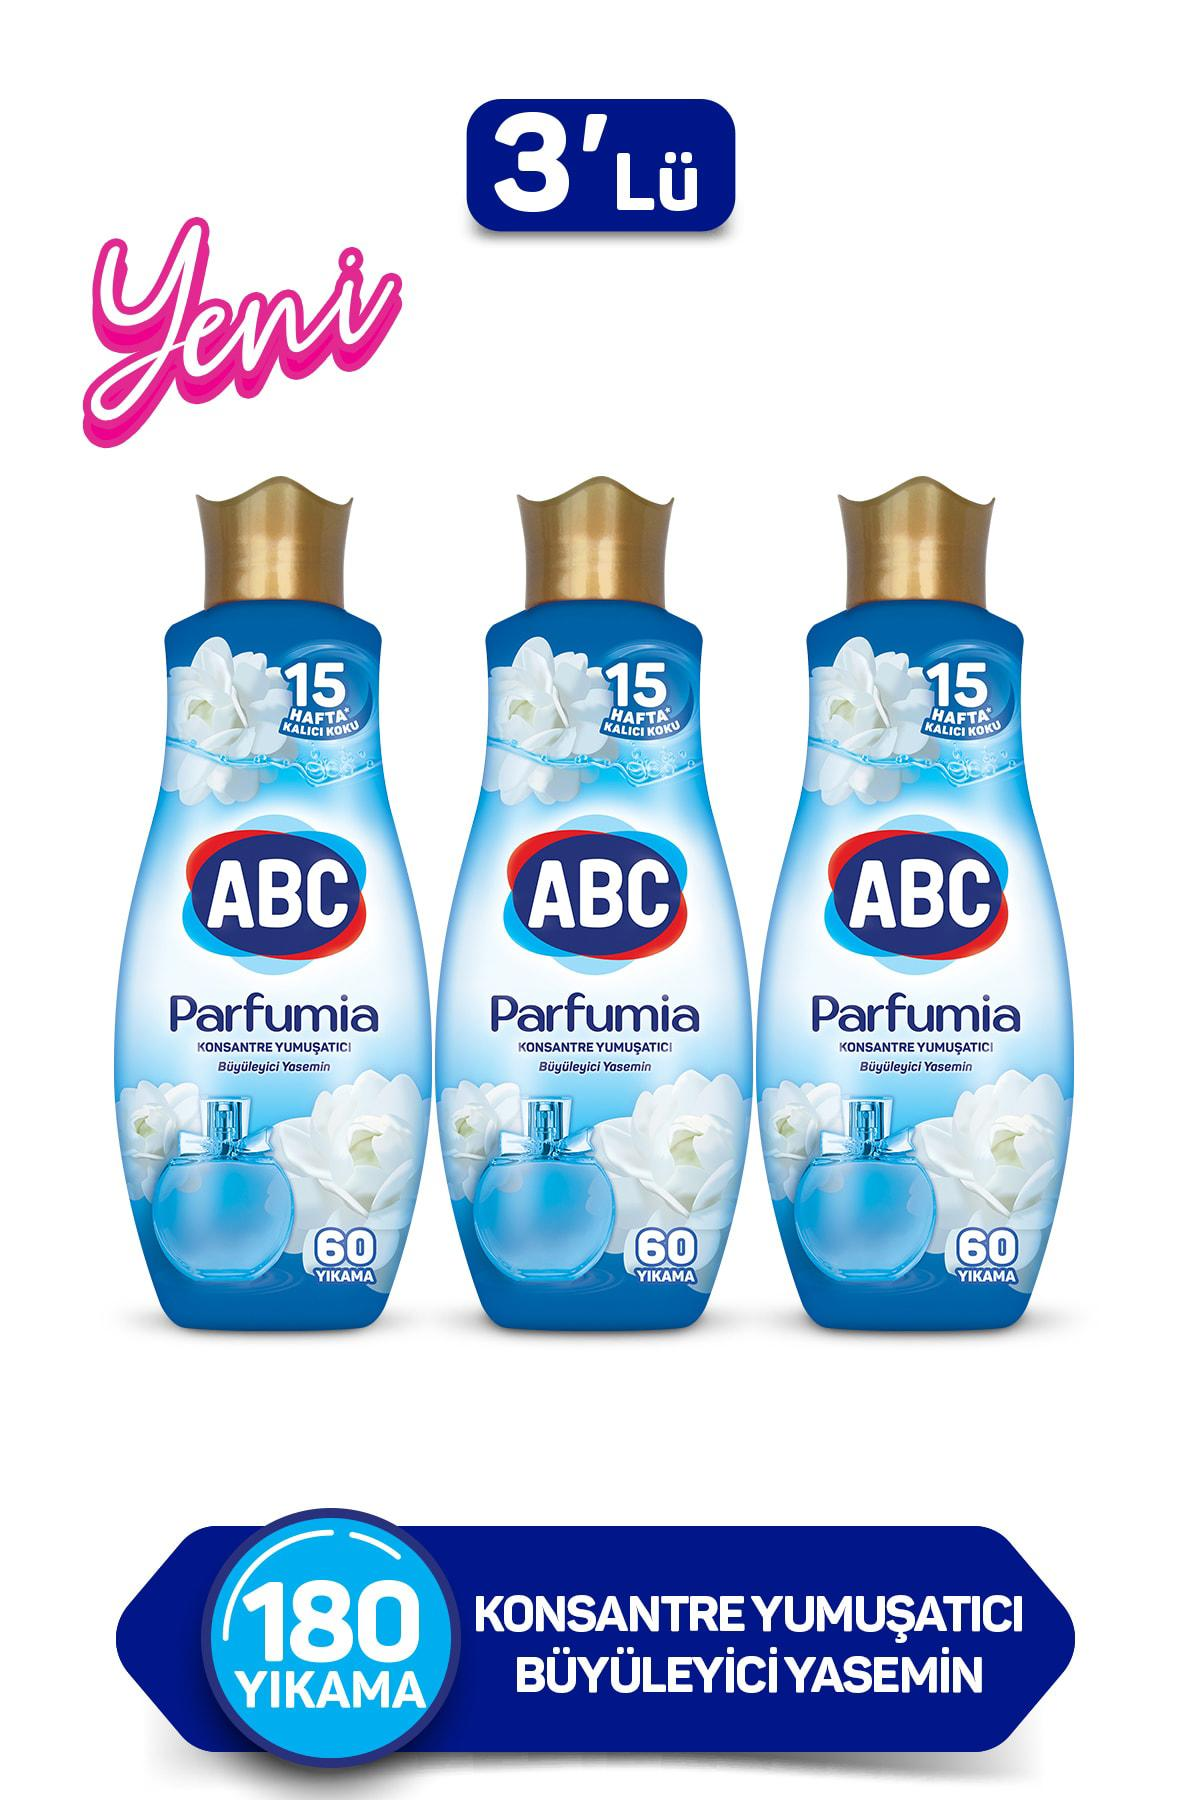 ABC Parfumia Konsantre Yasemin 60 Yıkama Yumuşatıcı 3 x 1.44 lt